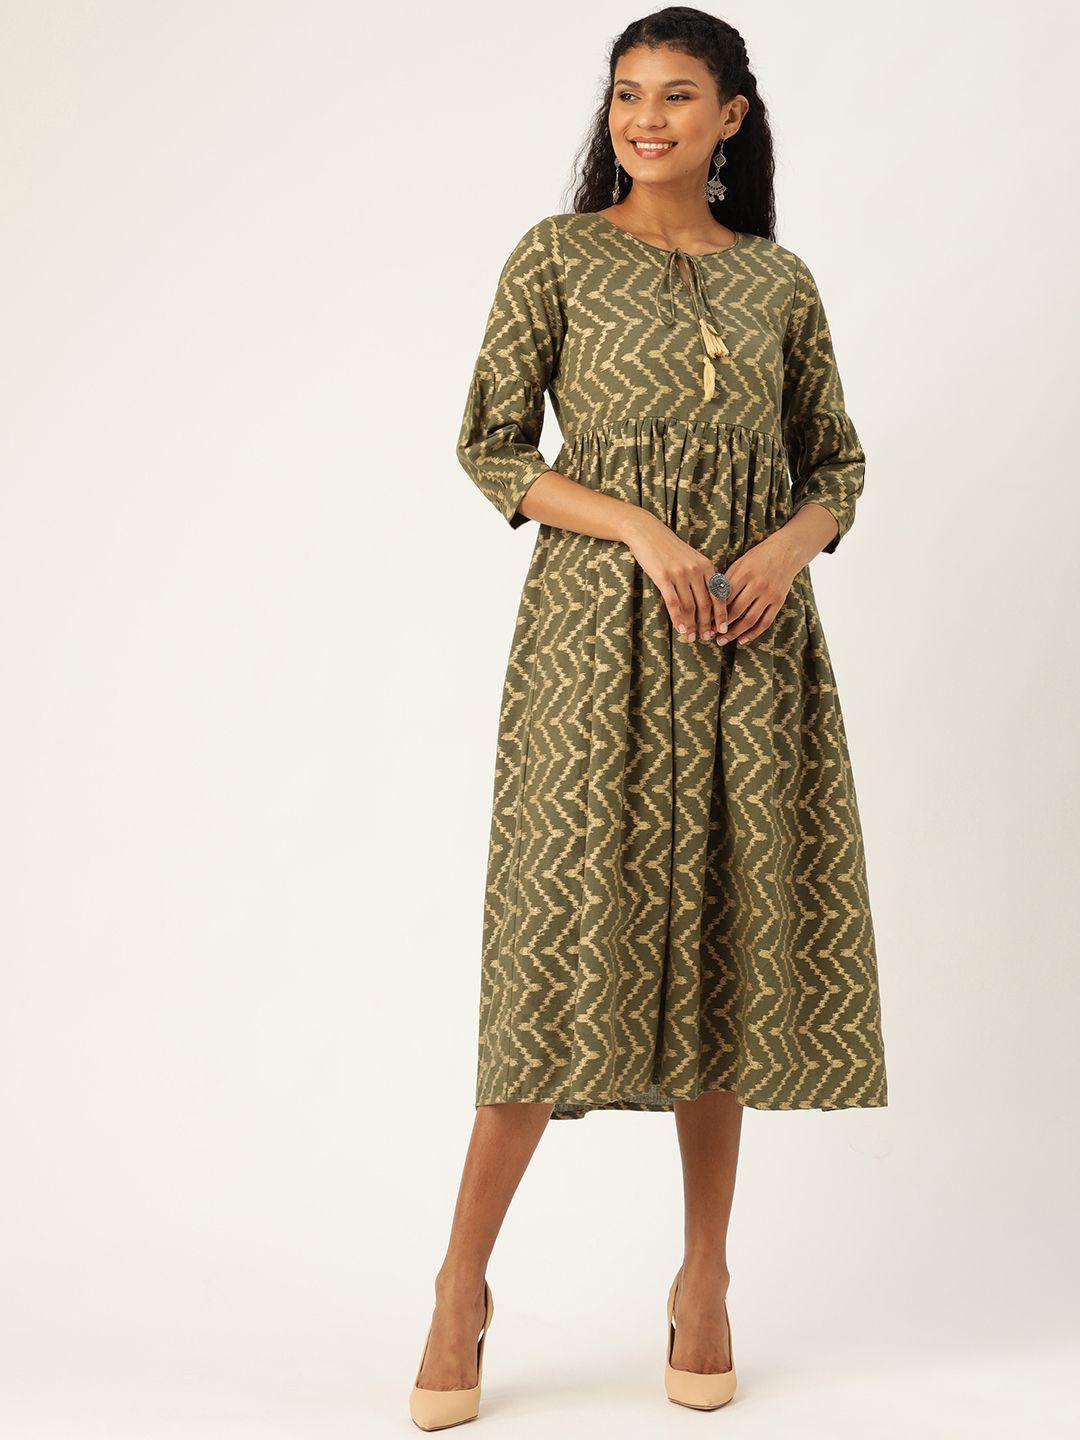 shae by sassafras women olive green & golden chevron printed a-line dress